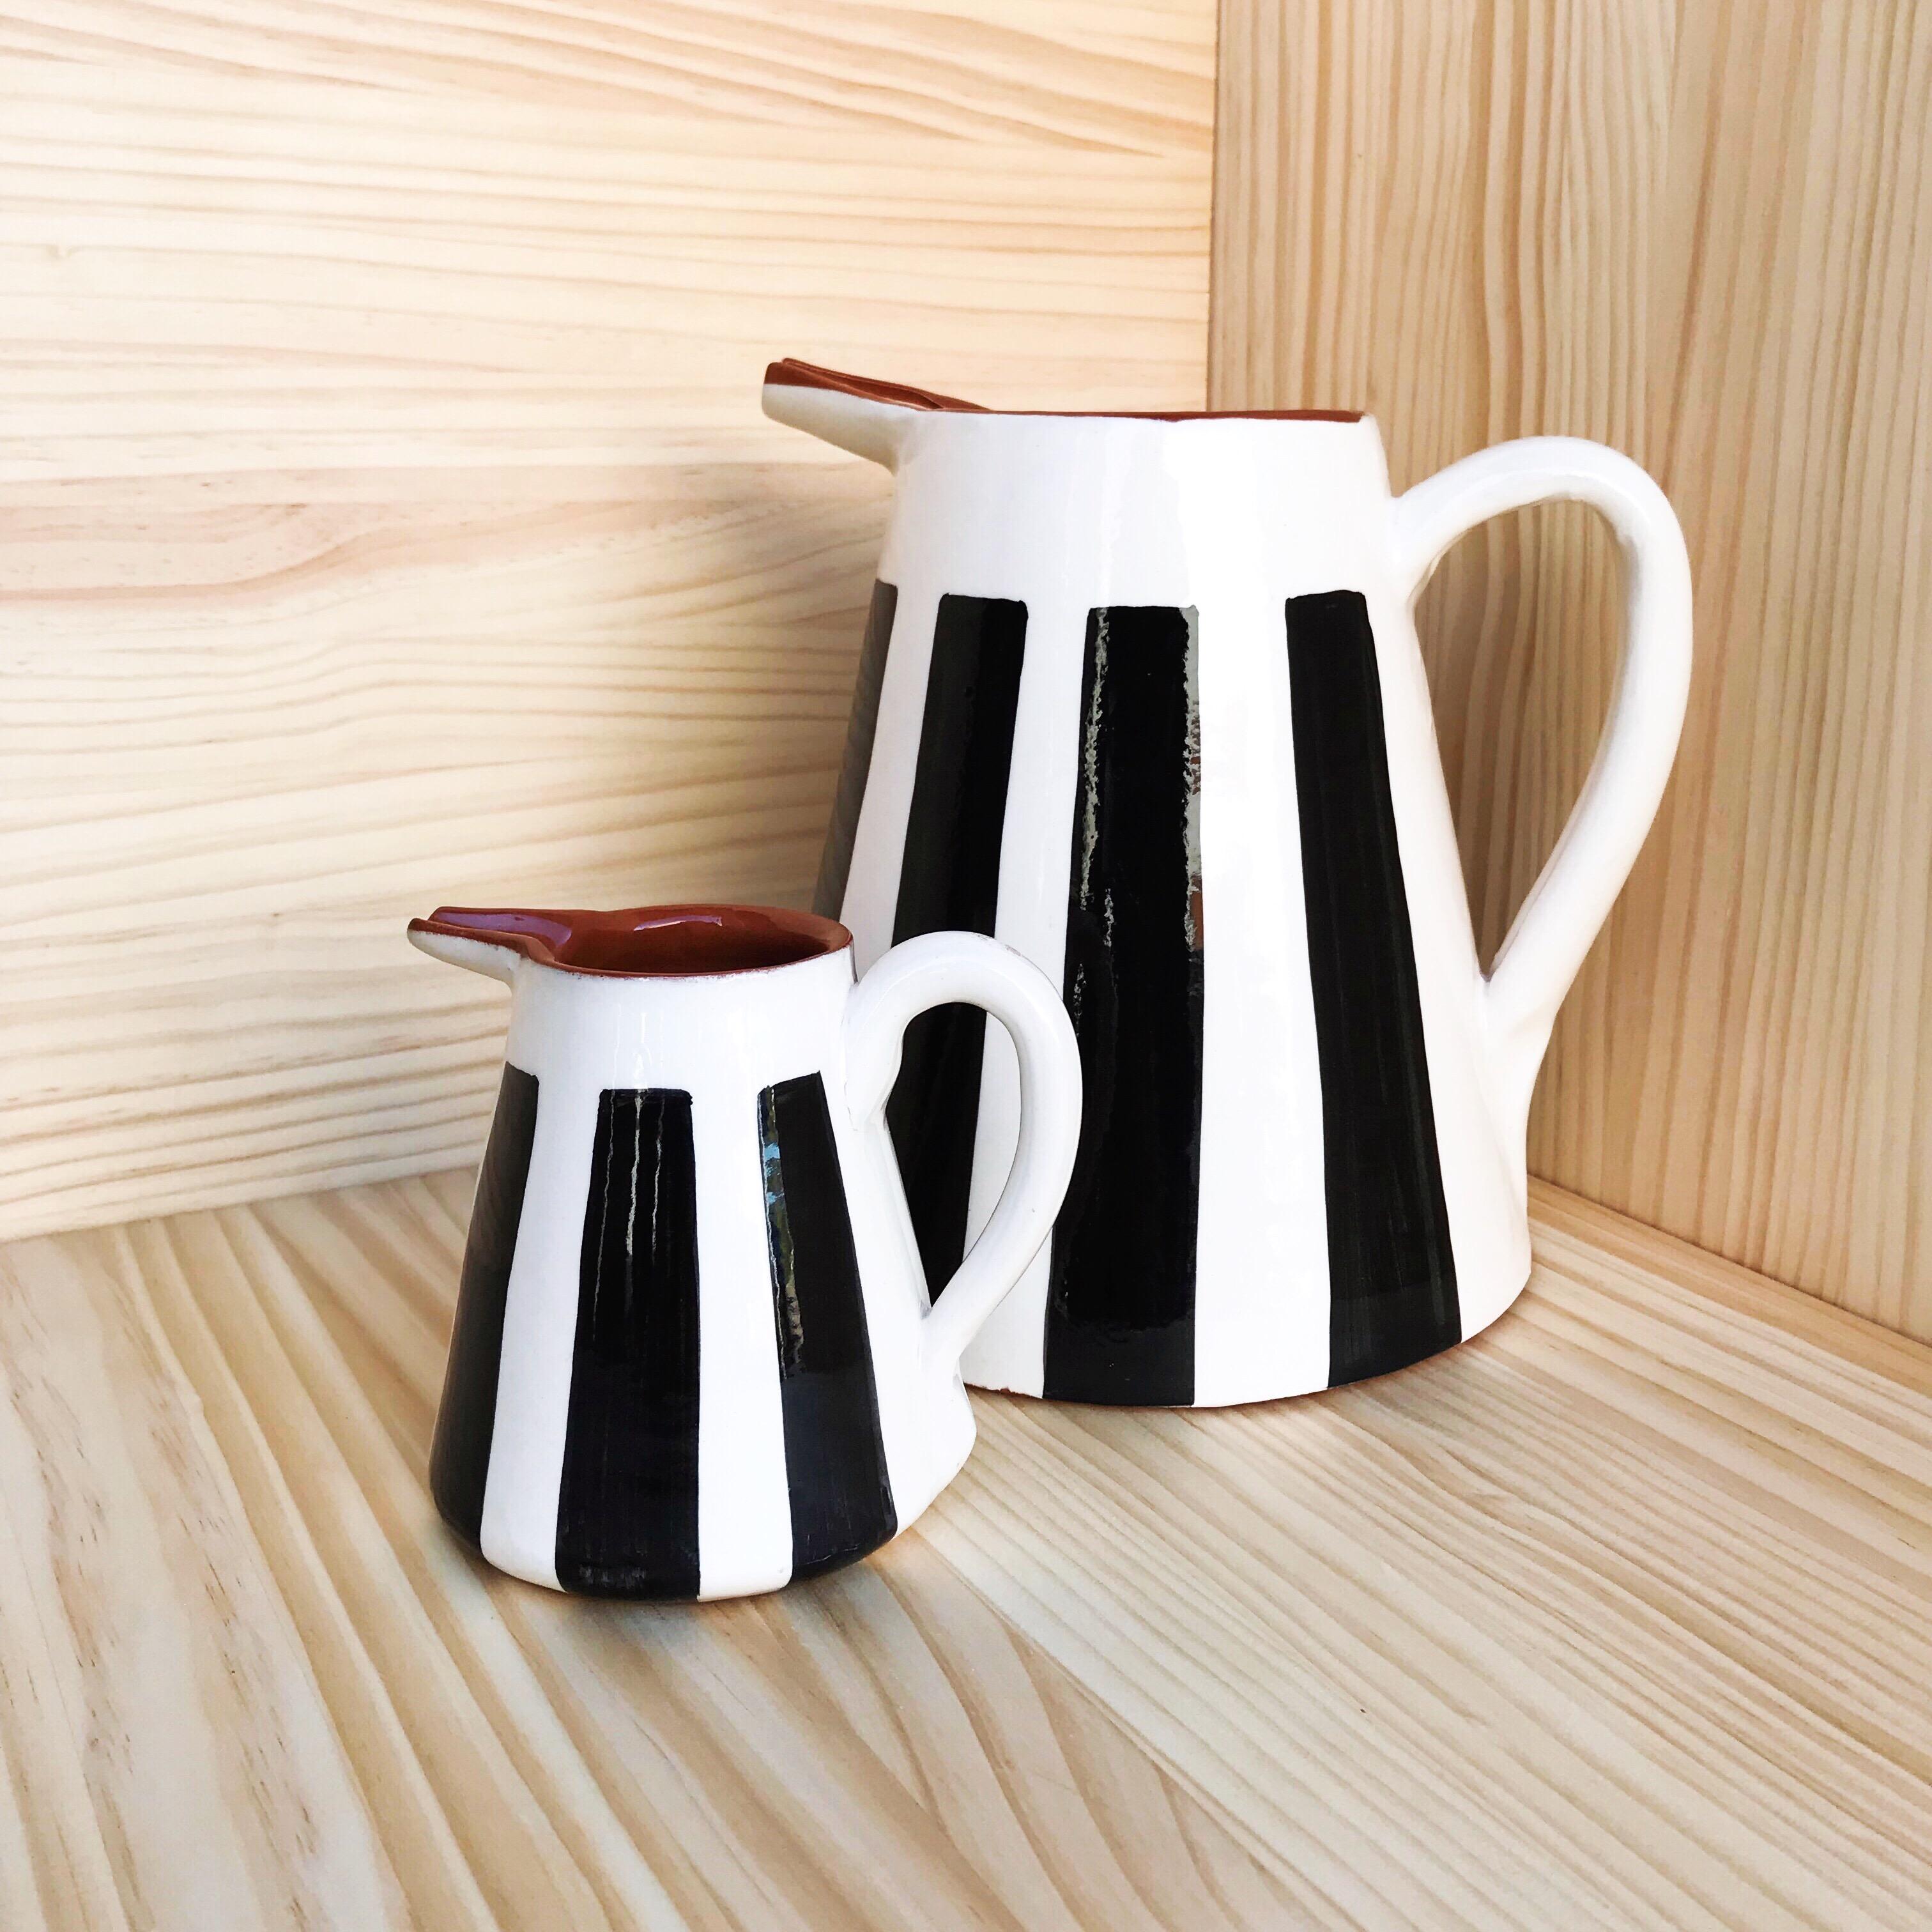 Rustic Handmade Ceramic Medium Pitcher with Graphic Black and White Design, in Stock